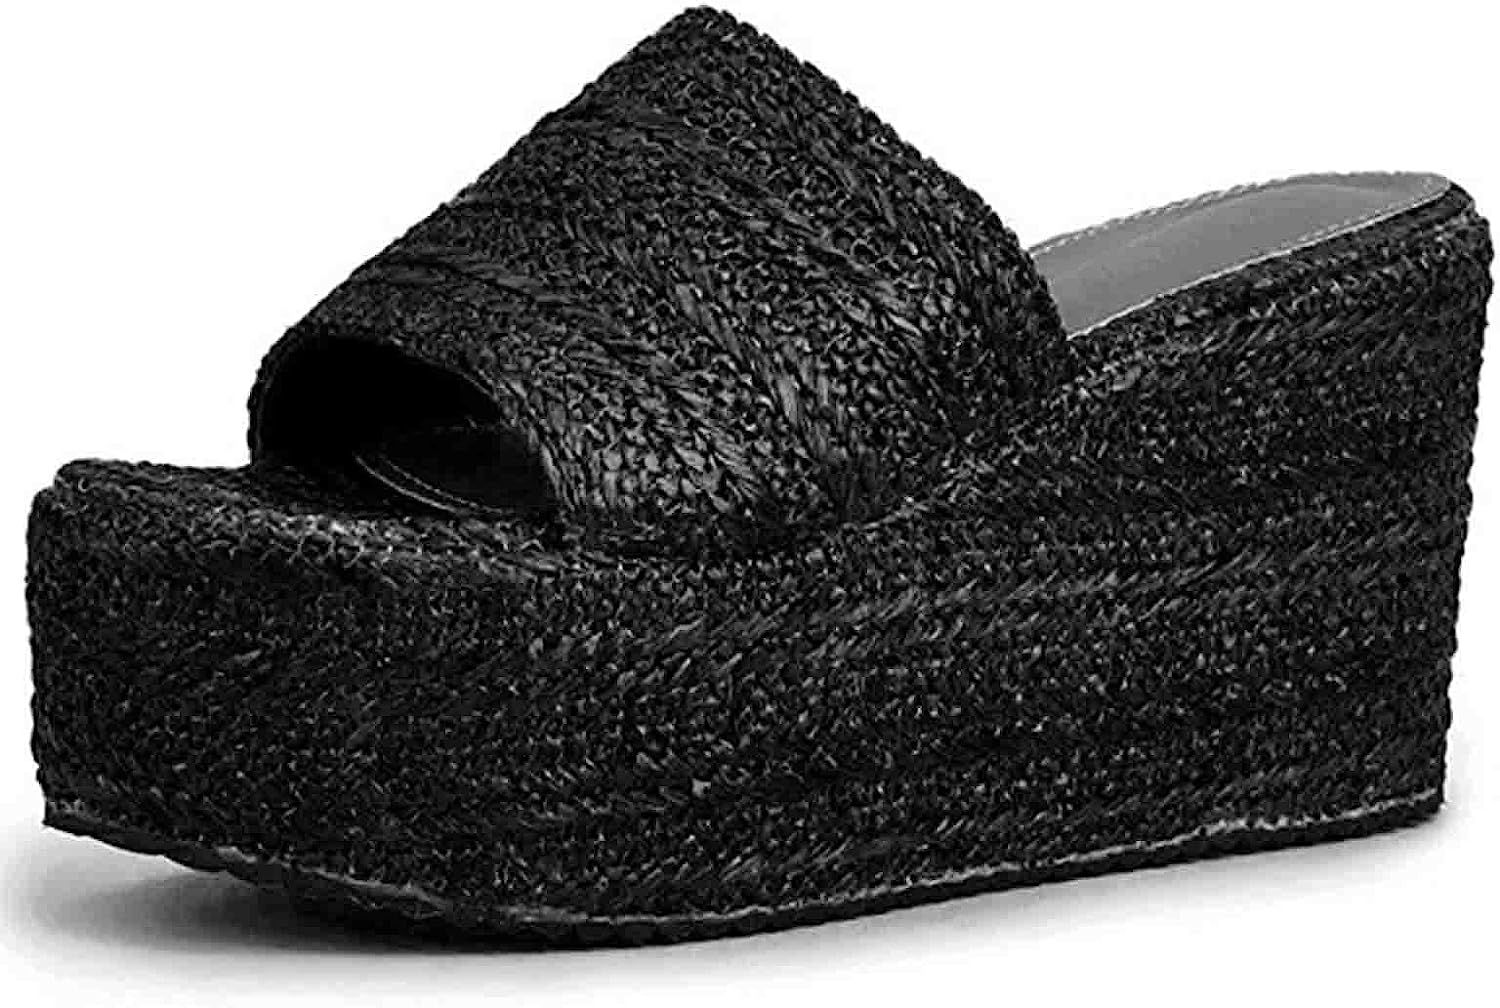 Erocalli Platform Slip on Espadrille Sandals for Women Wedges Slides Bohemia Sandals Flatform Ope... | Amazon (US)